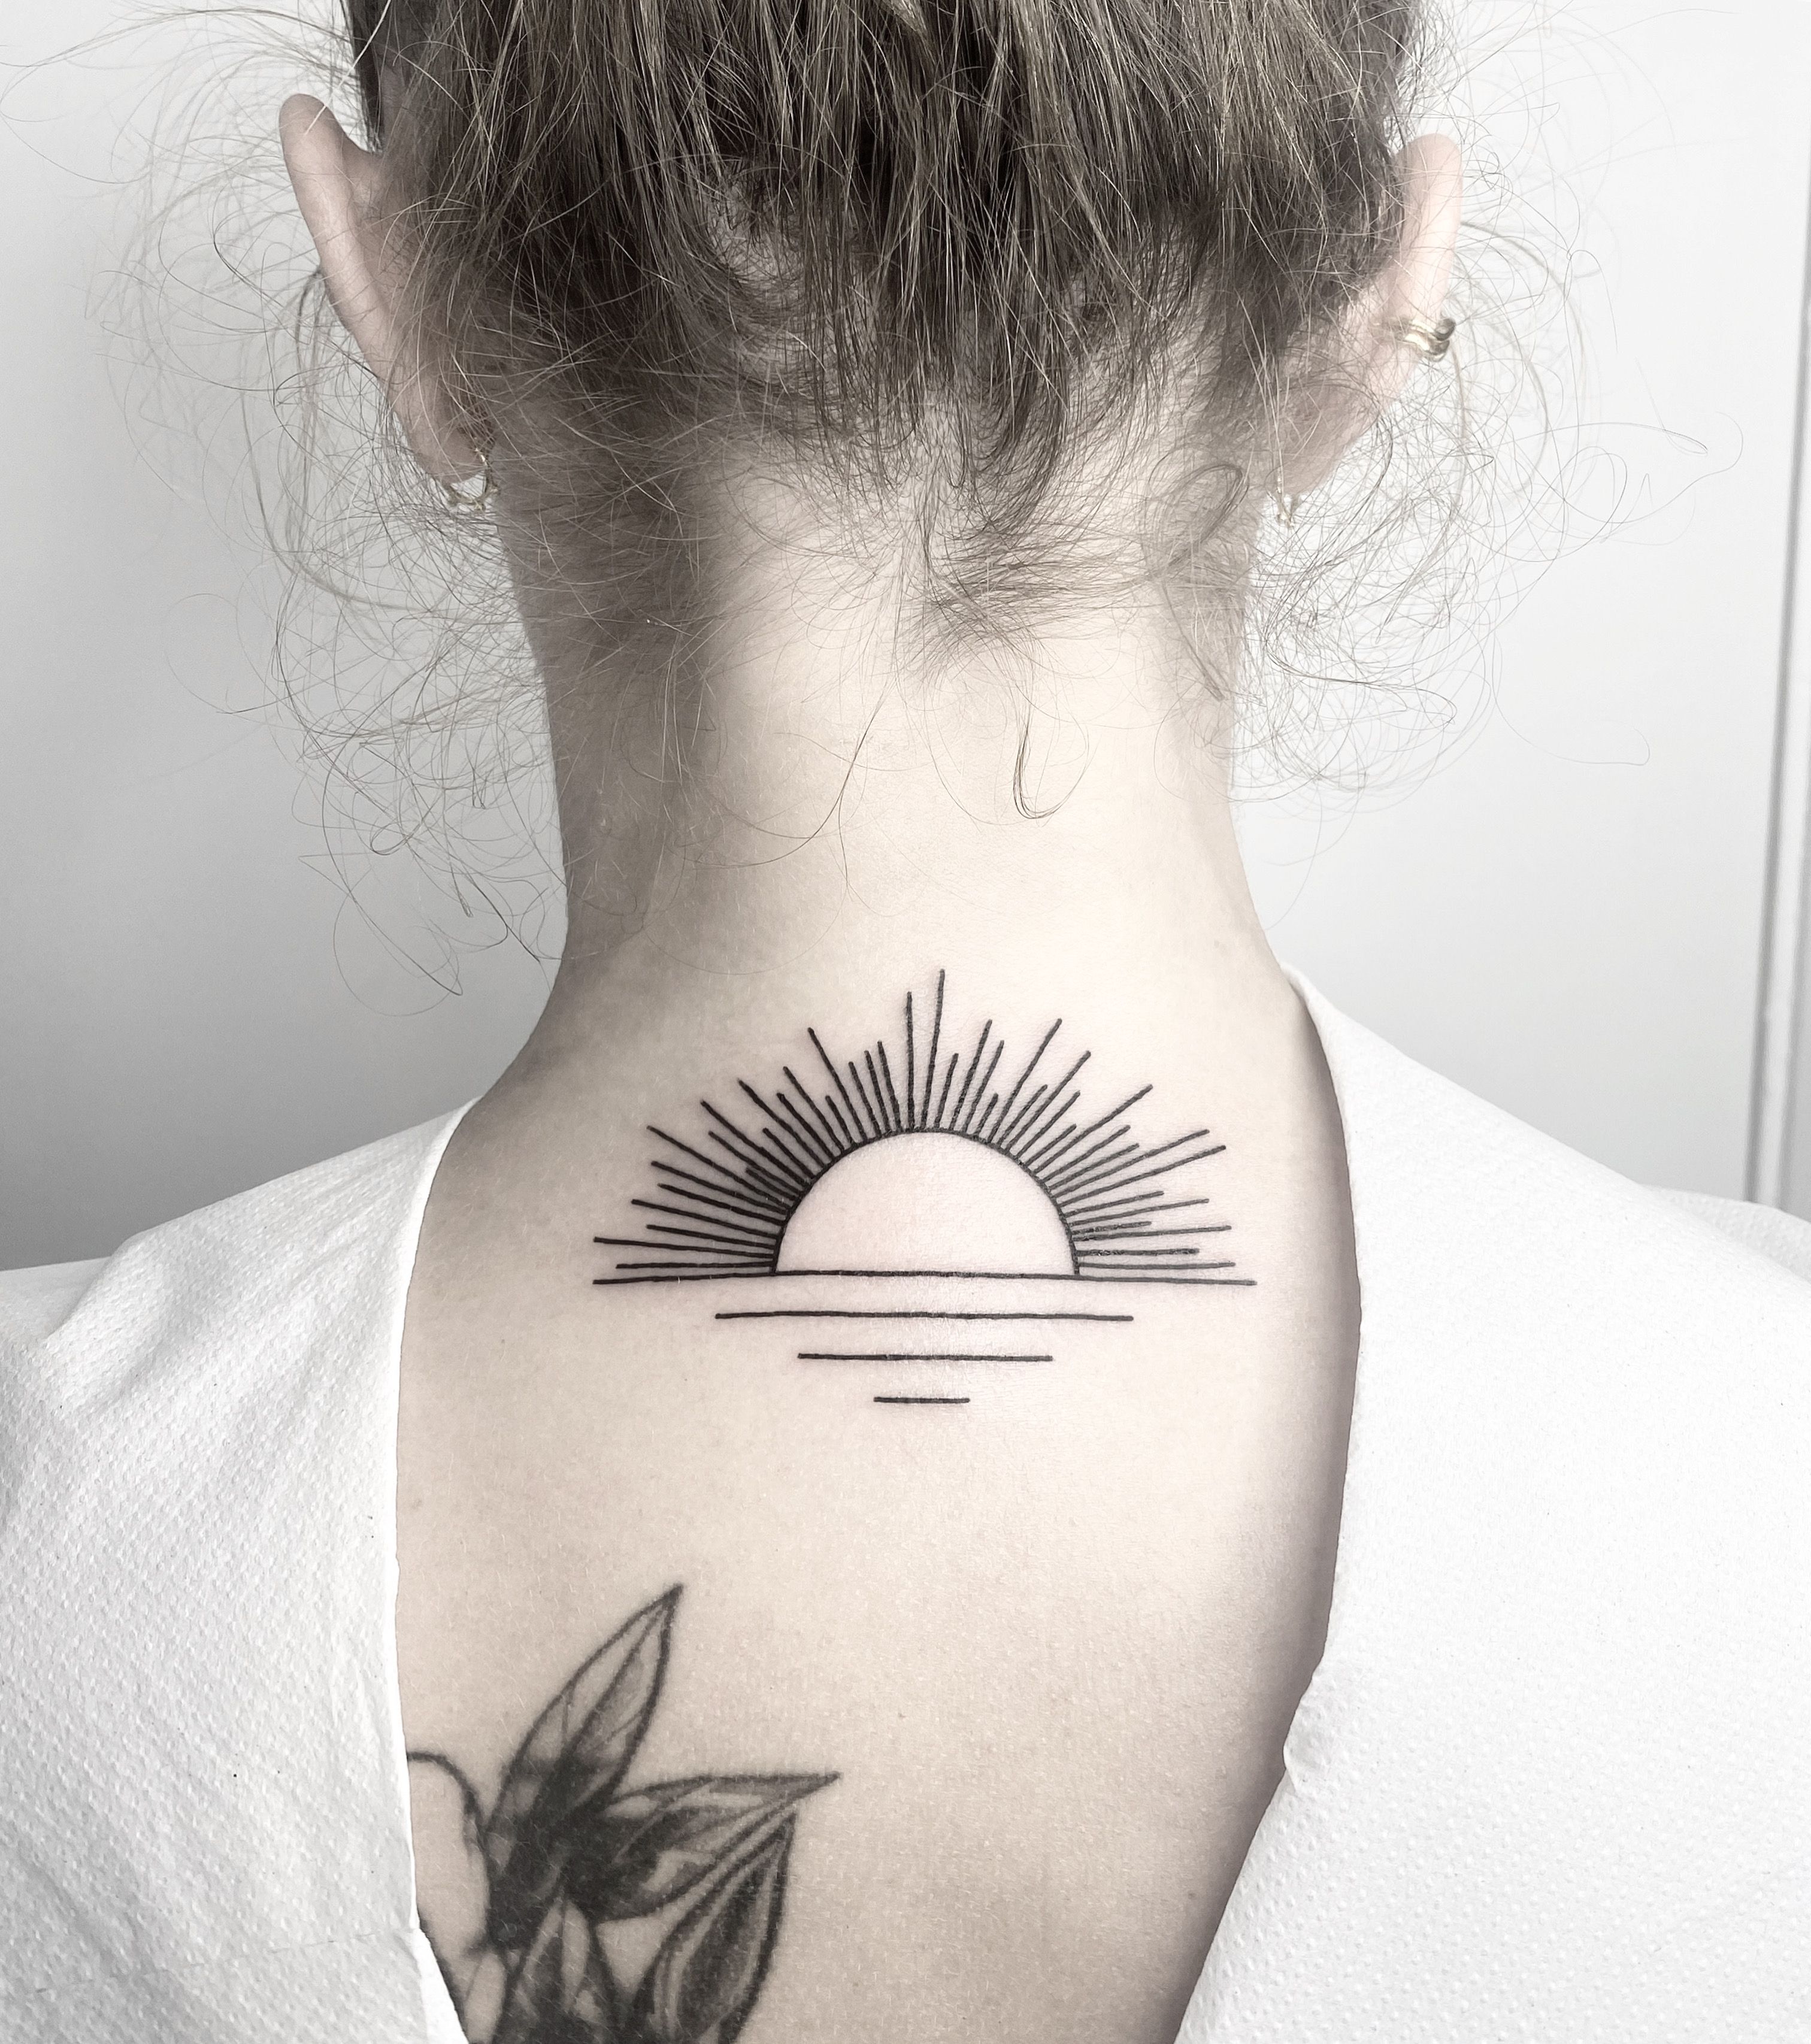 Sunset tattoo by jimmy barker - Tattoogrid.net